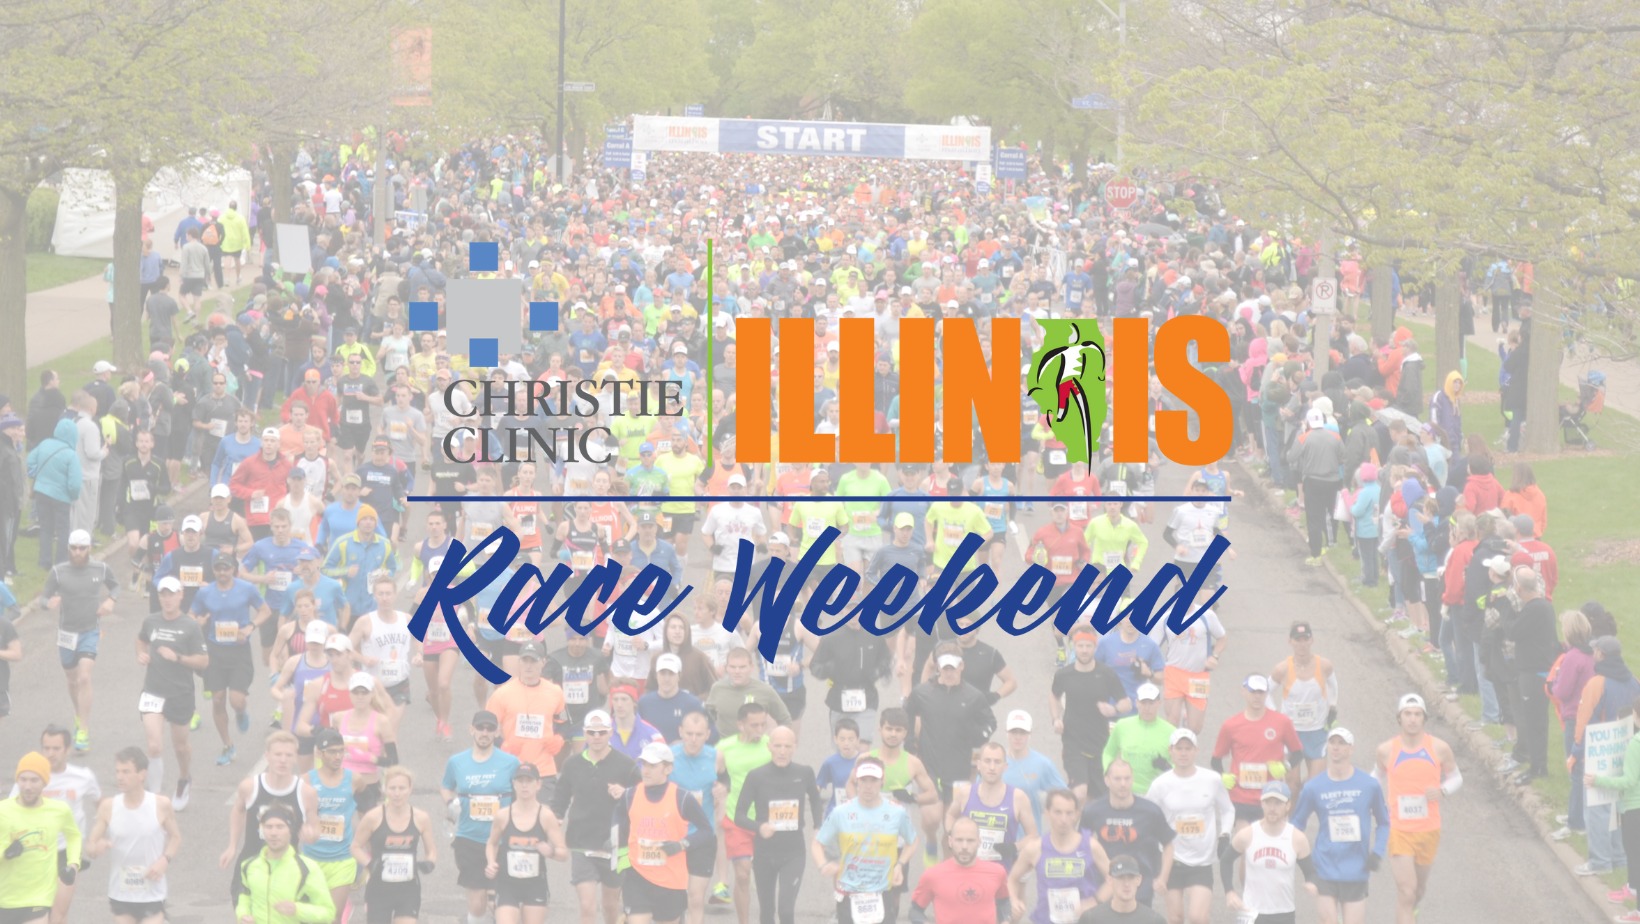 Christie Clinic: Illinois Marathon – A Celebration of Health and Community